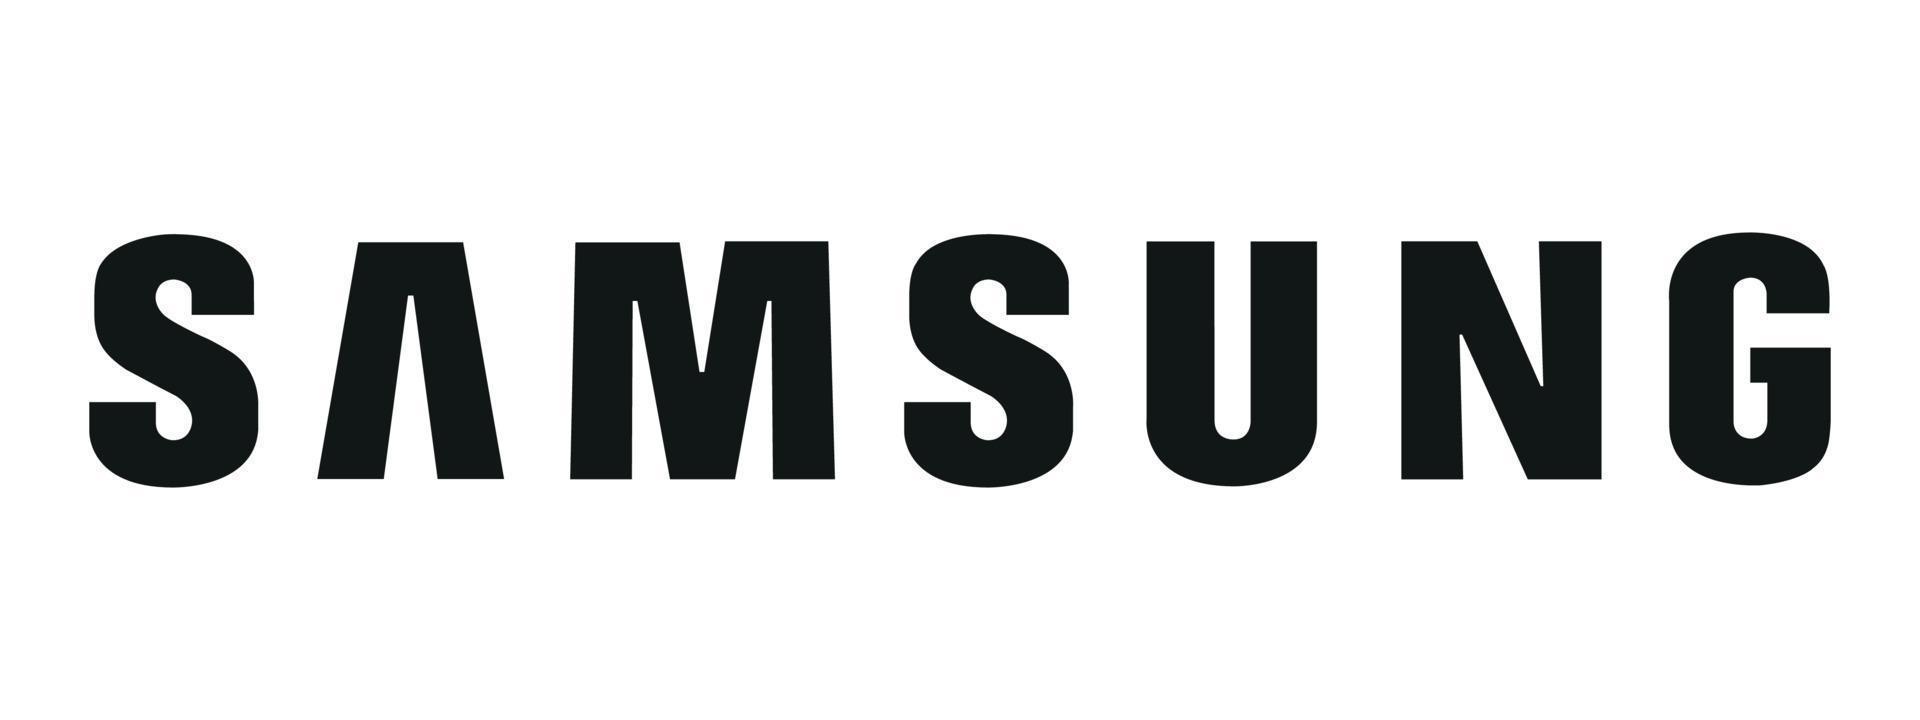 samsung-logo-on-transparent-background-free-vector